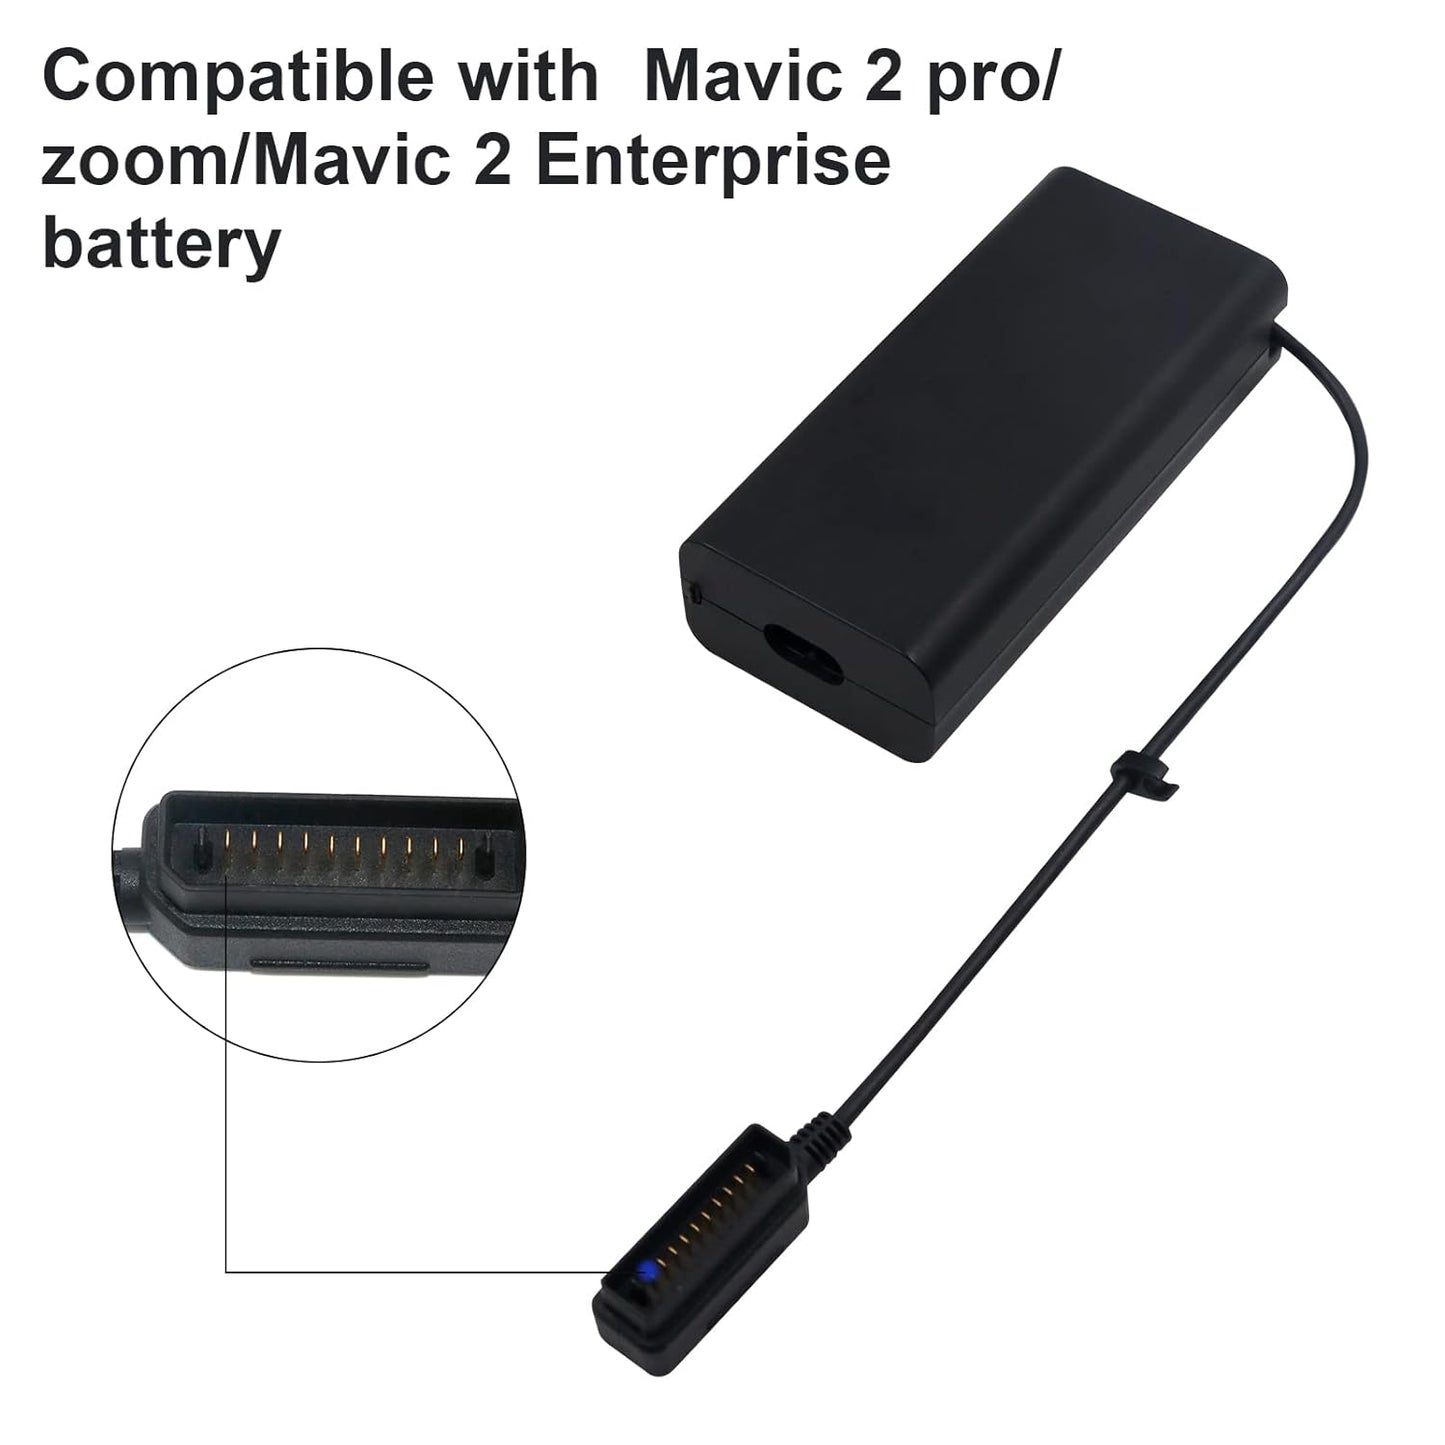 Mavic 2 Battery Charger For DJI Mavic 2 Pro/Zoom